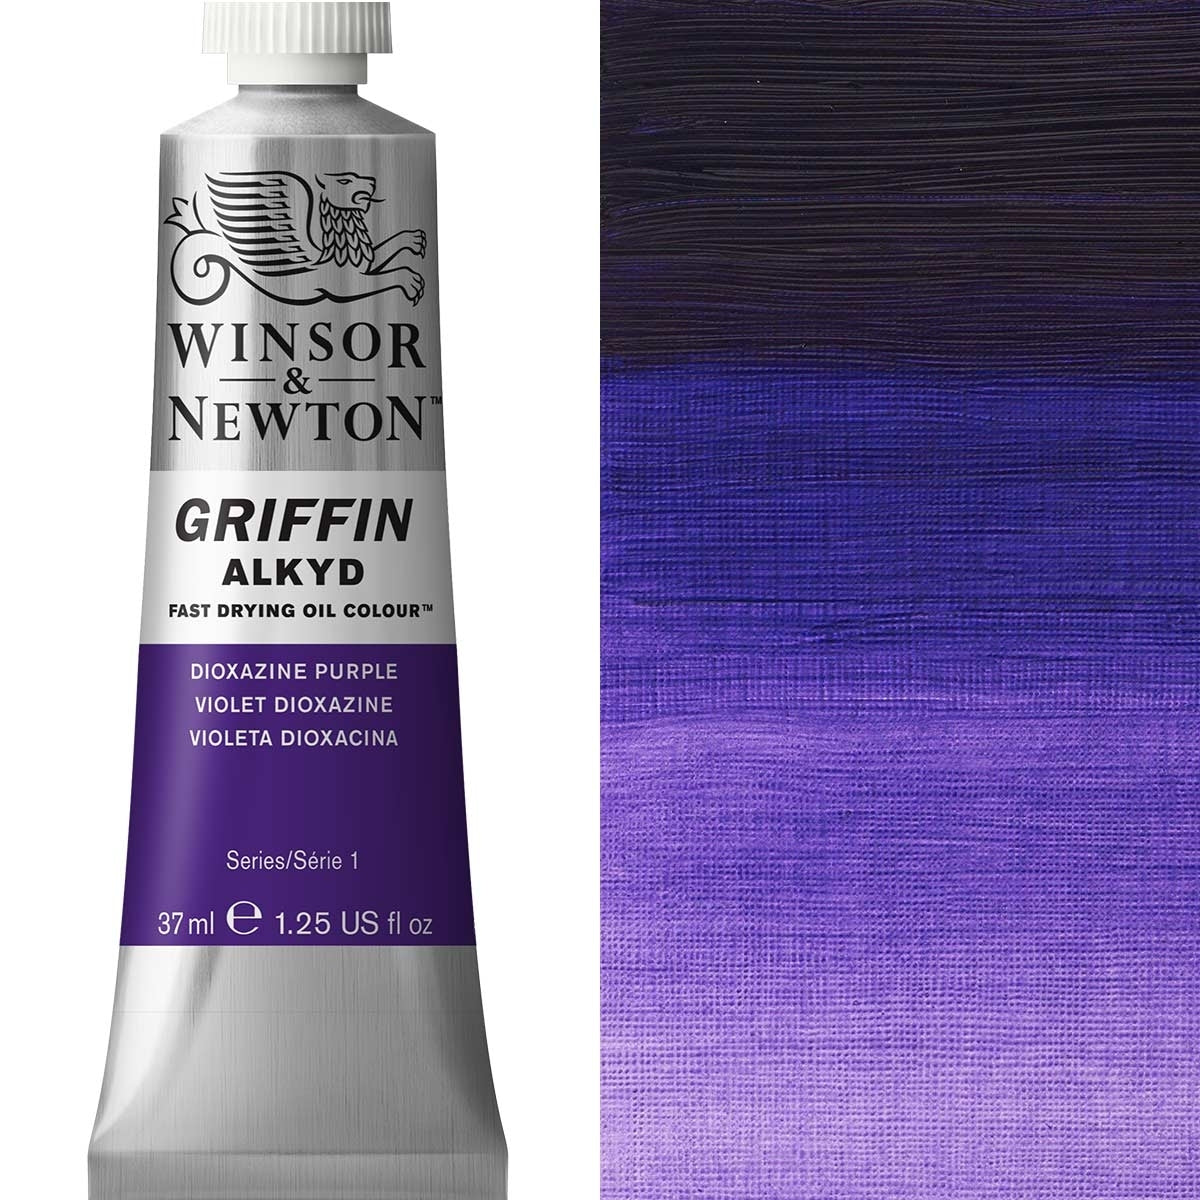 Winsor and Newton - Griffin ALKYD Oil Colour - 37ml - Dioxazine Purple